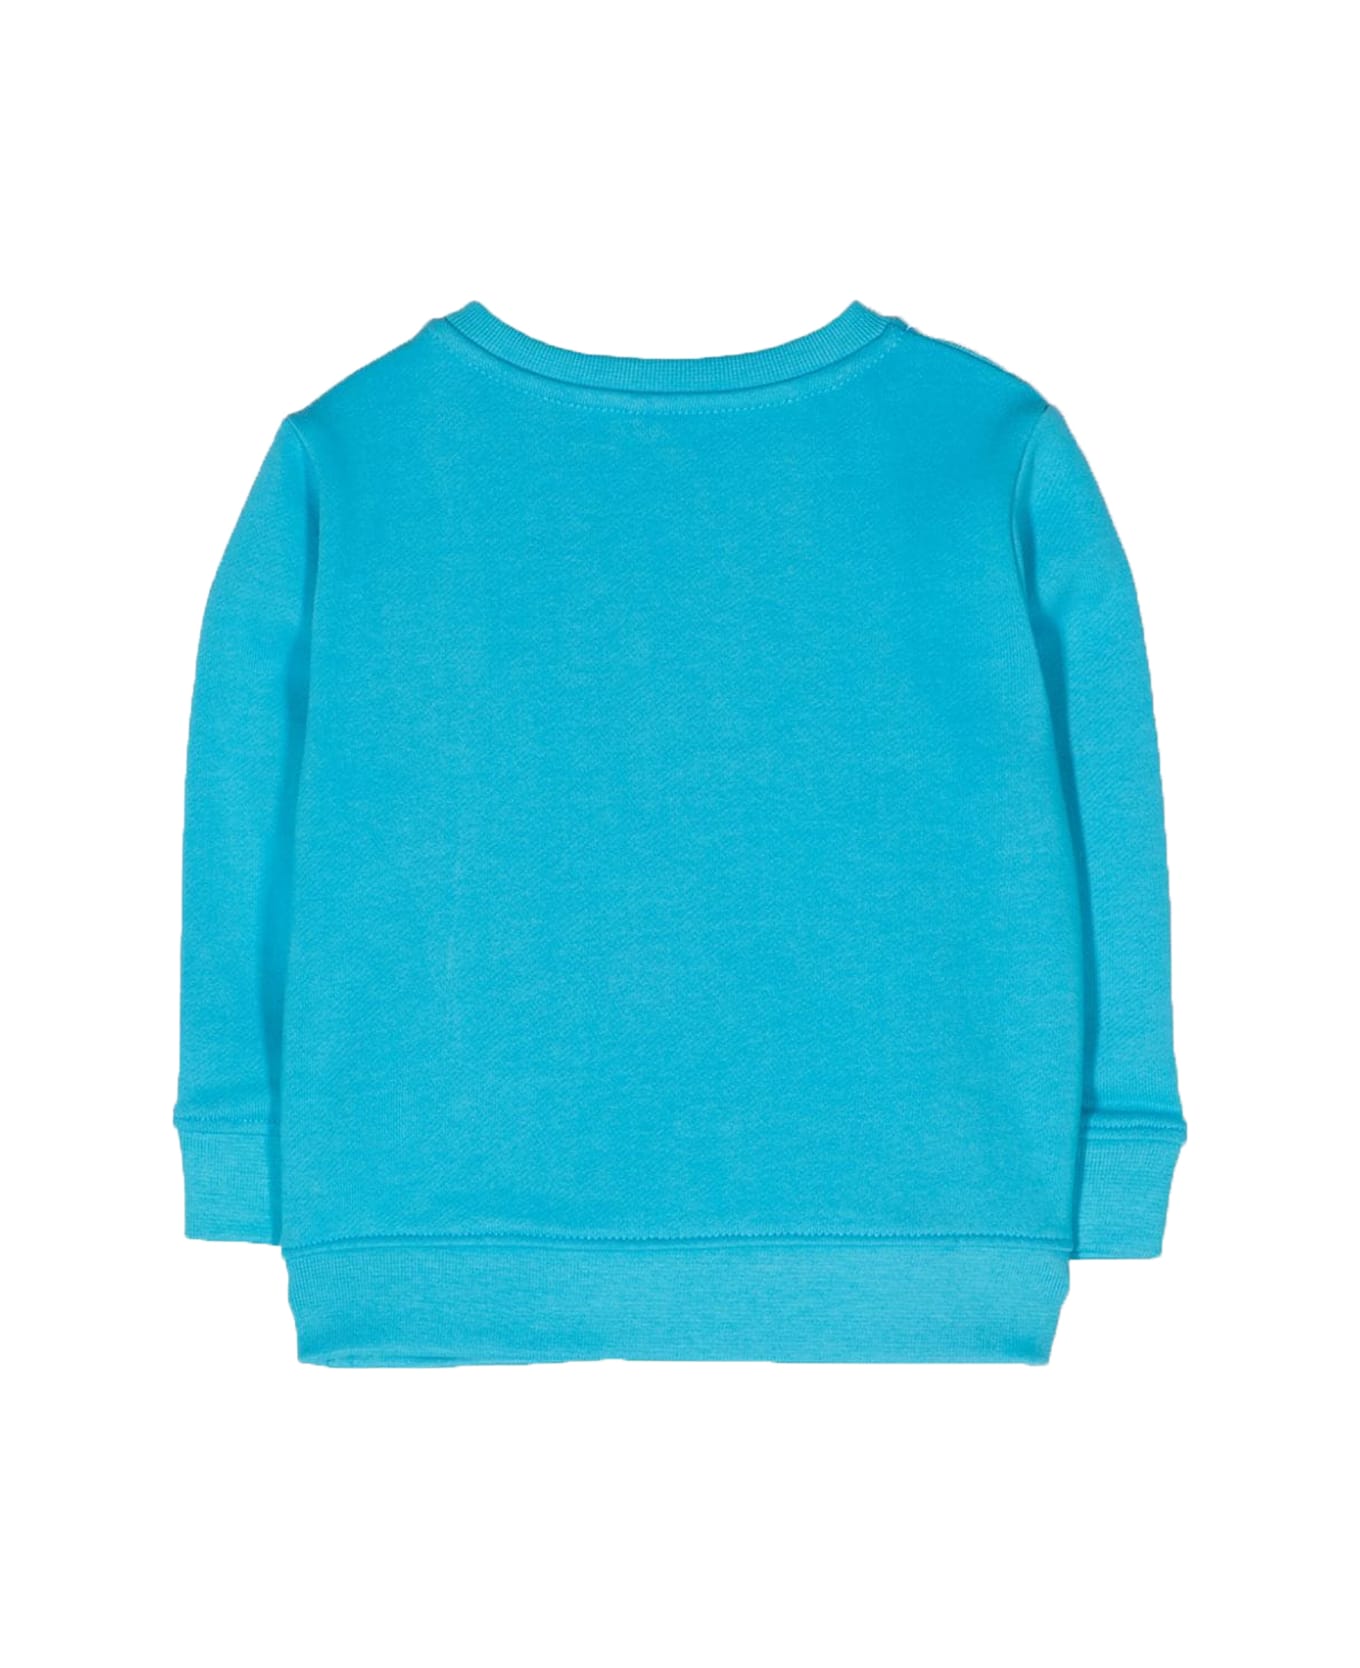 Stella McCartney Kids Cotton Sweatshirt - Light blue